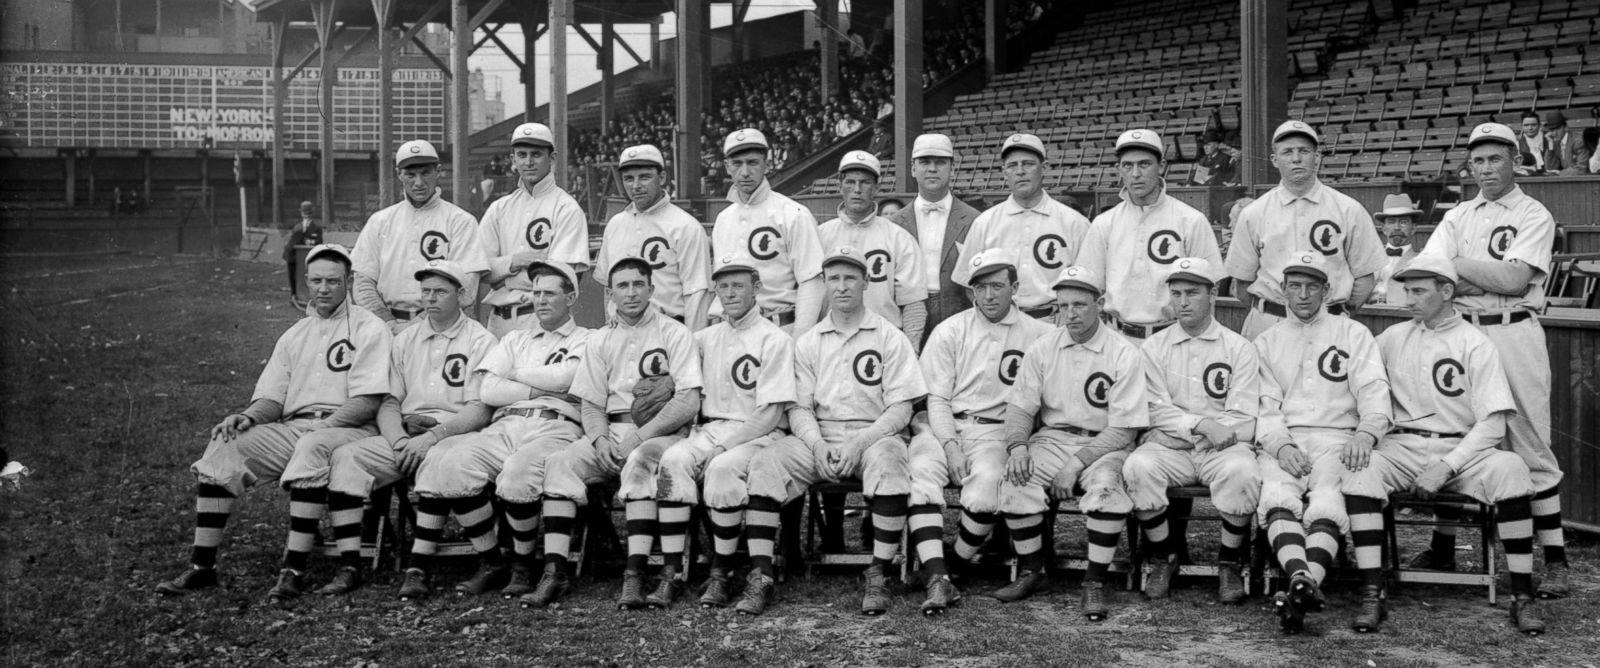 Chicago Cubs-World Series-108 years-intergenerational bonding-masculinity-feminization-camaraderie